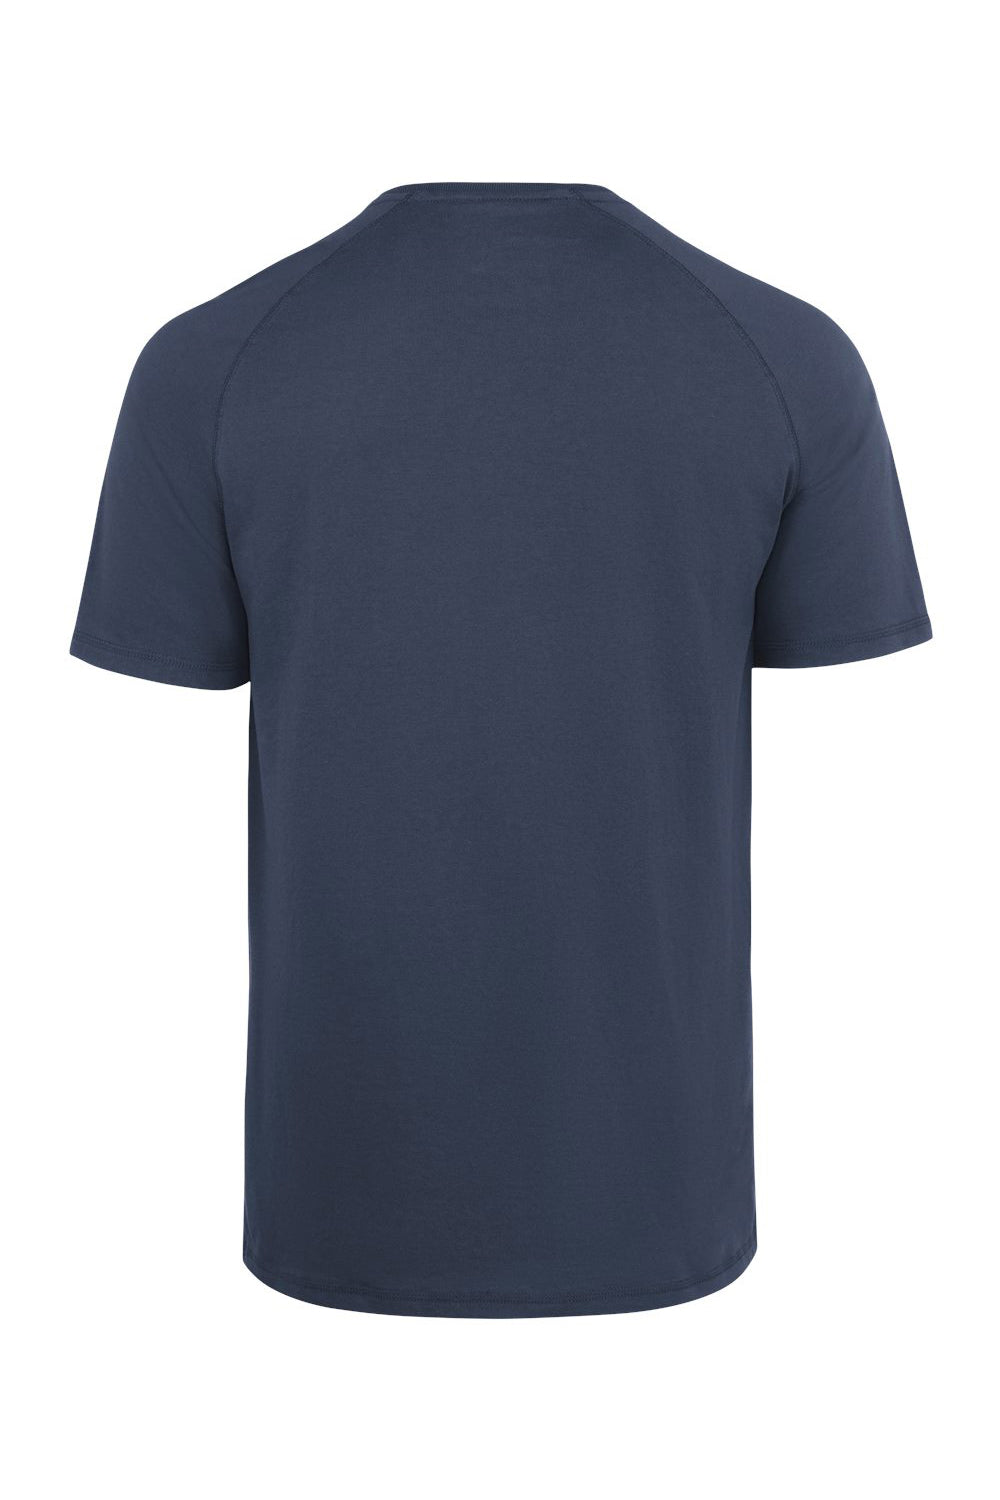 Dickies S600 Mens Performance Moisture Wicking Short Sleeve Crewneck T-Shirt w/ Pocket Dark Navy Blue Flat Back